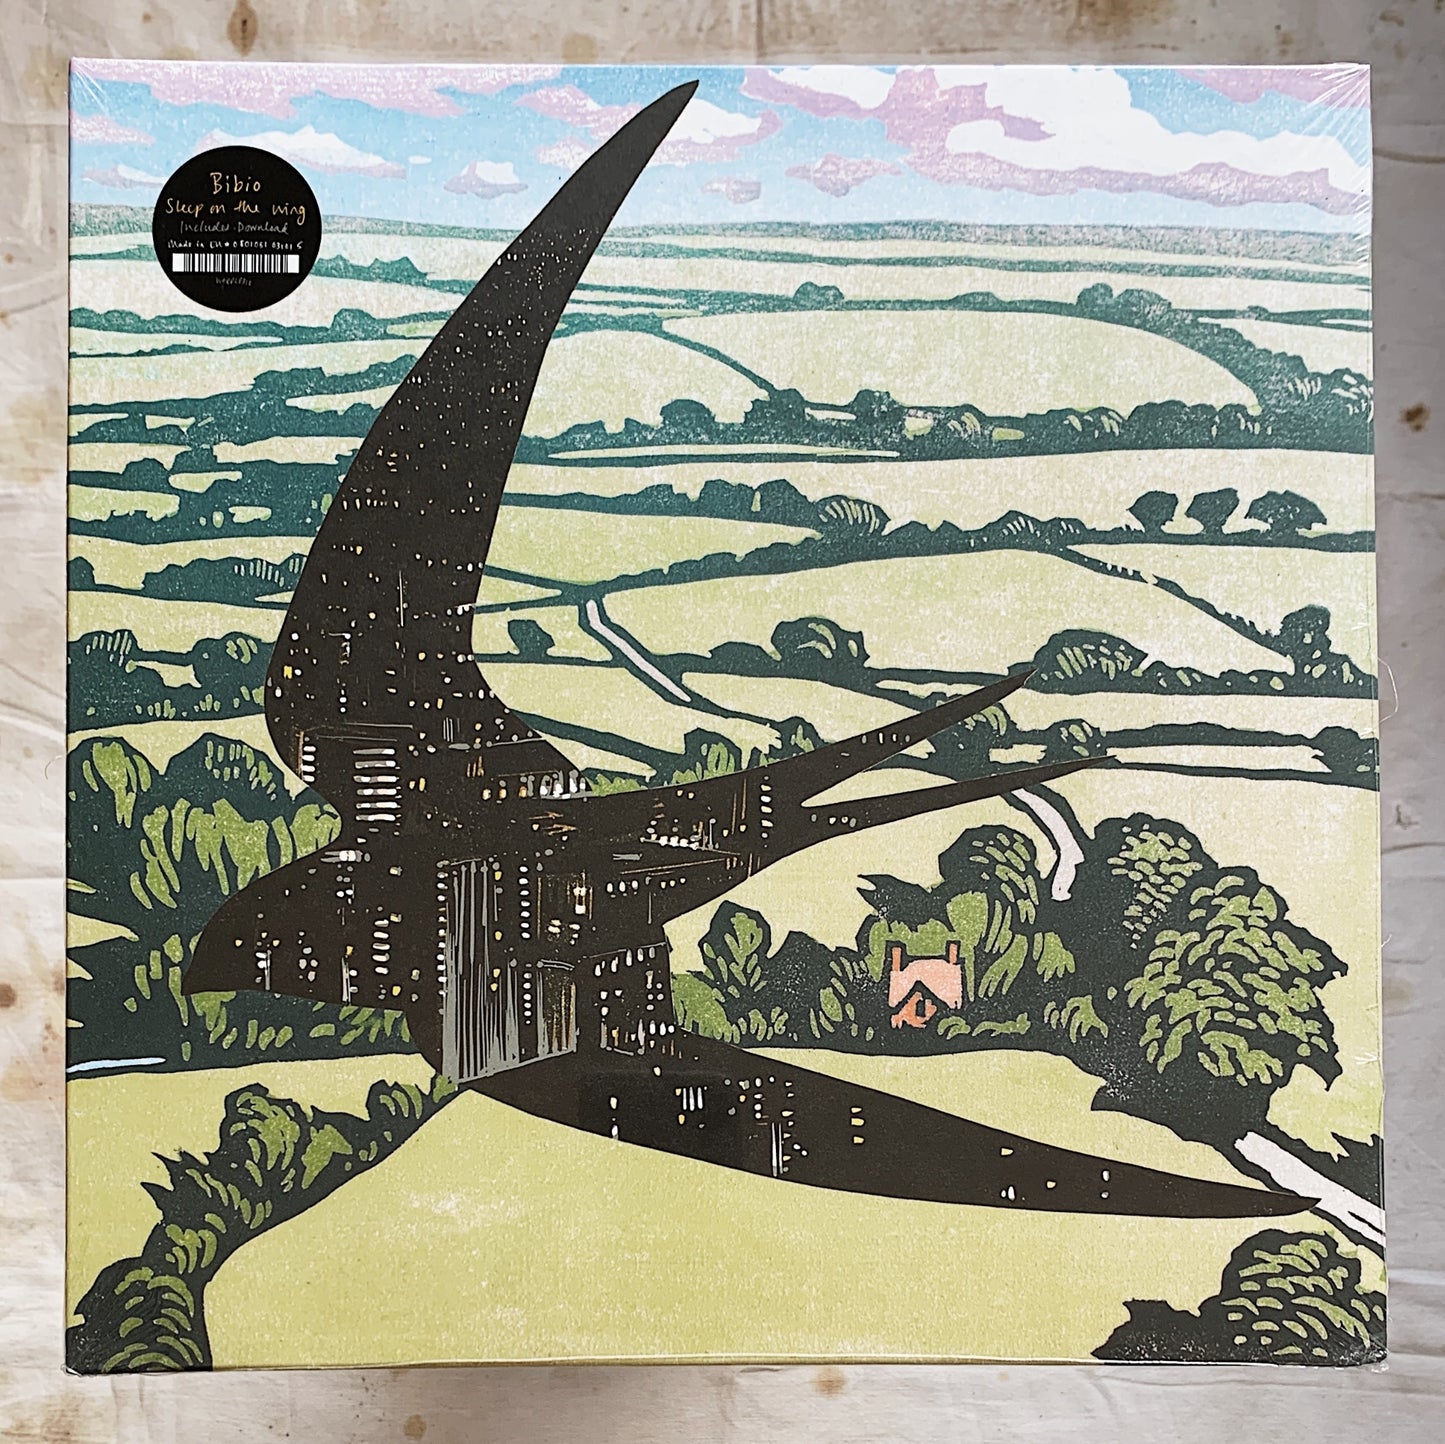 Bibio / Sleep On The Wing LP